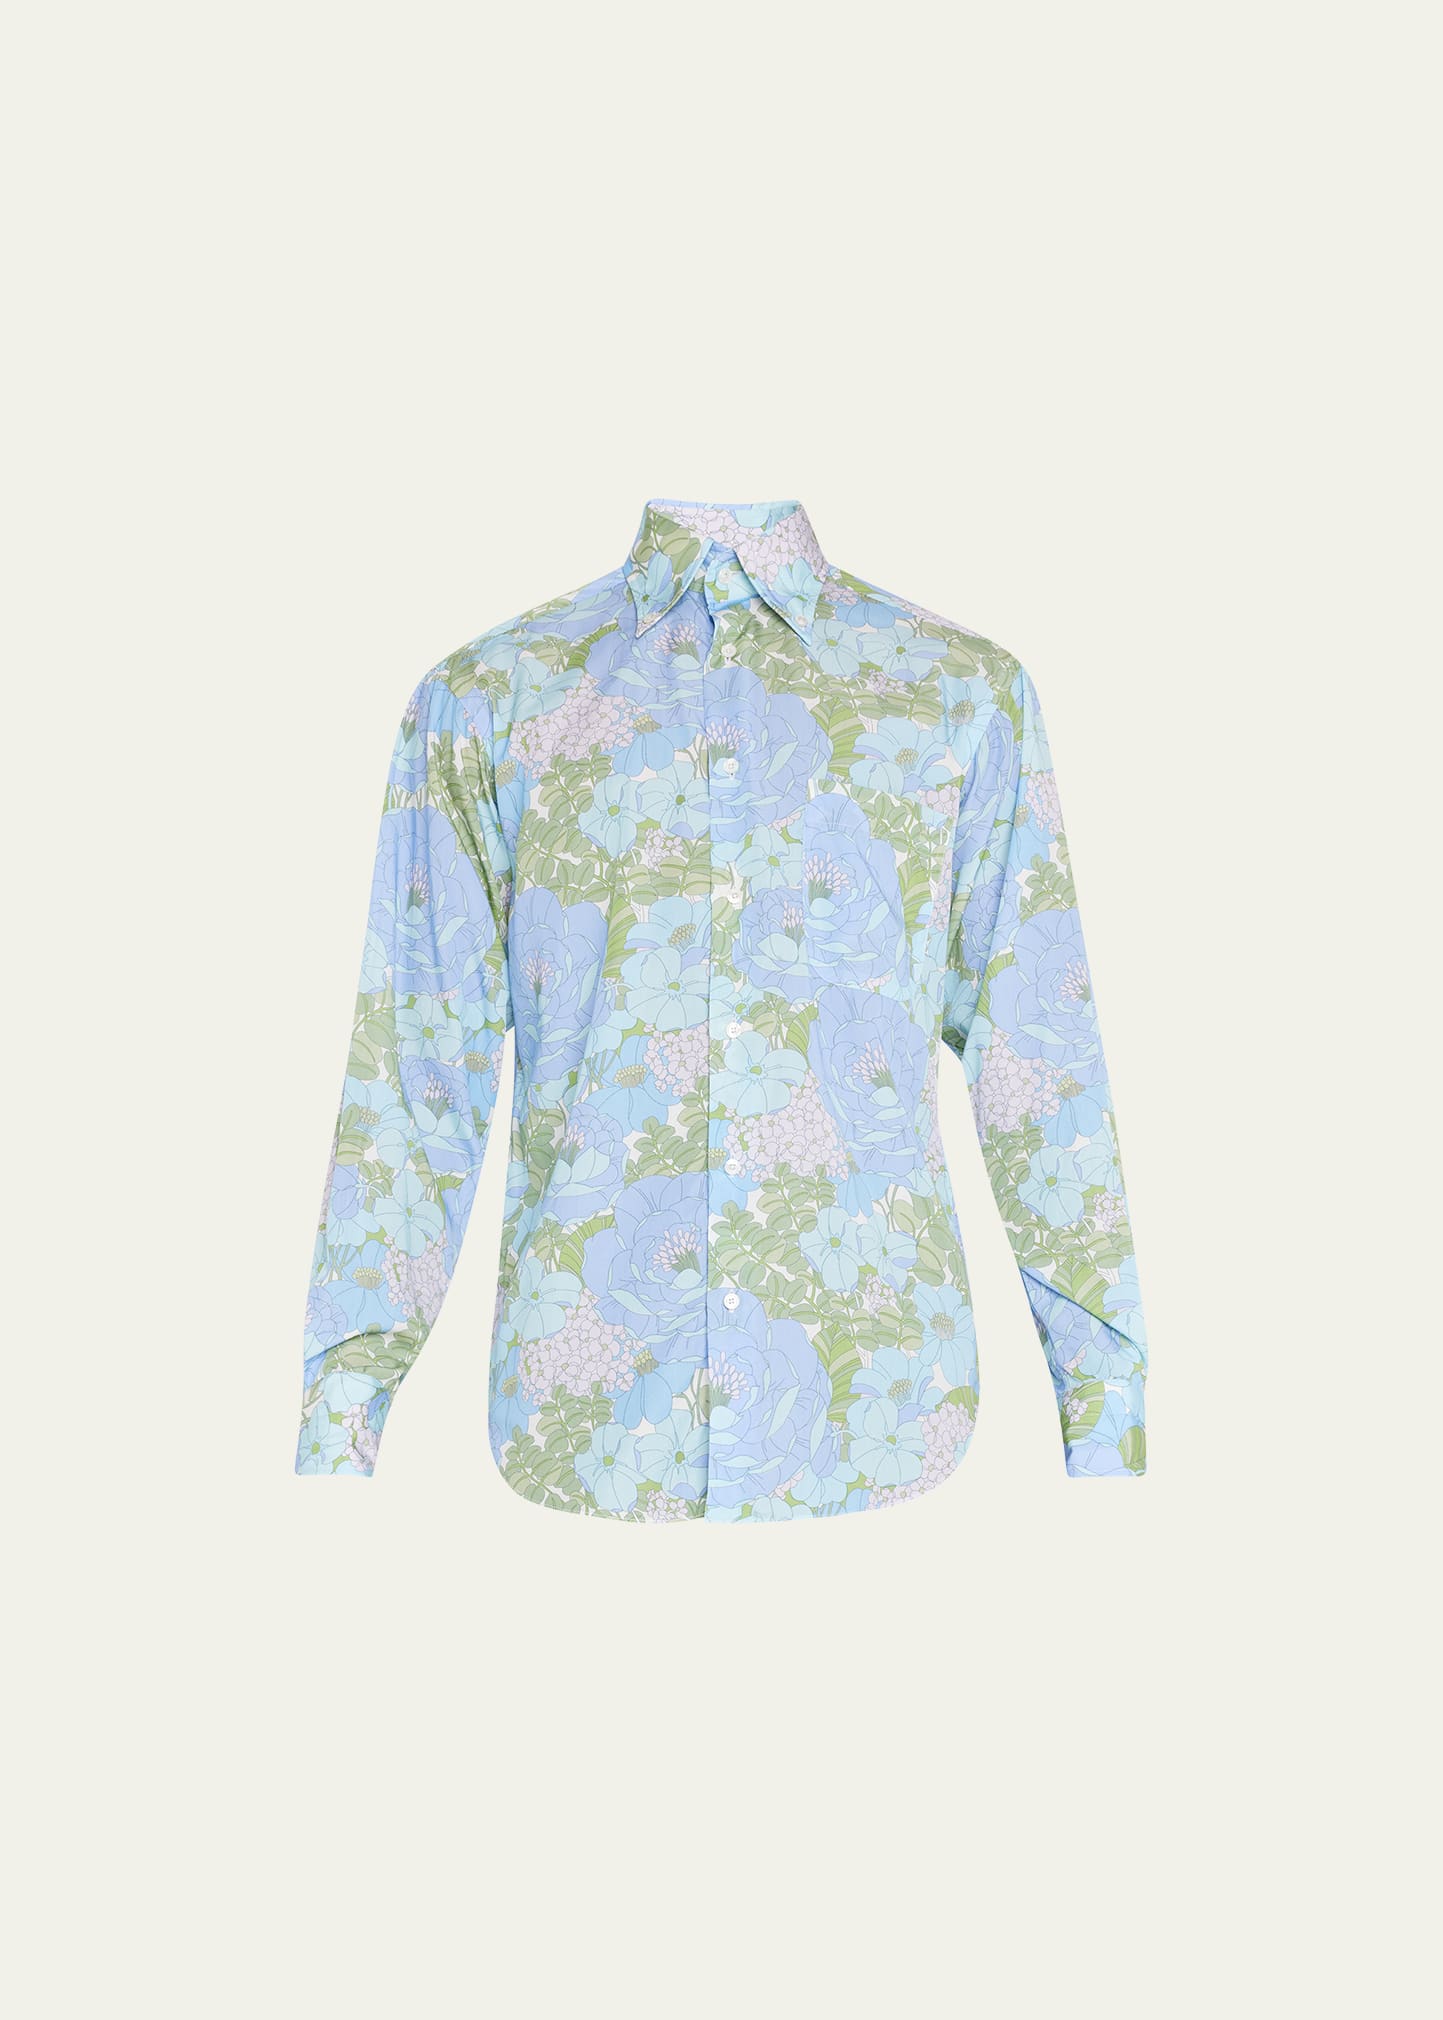 TOM FORD Men's Camouflage-Print Dress Shirt - Bergdorf Goodman